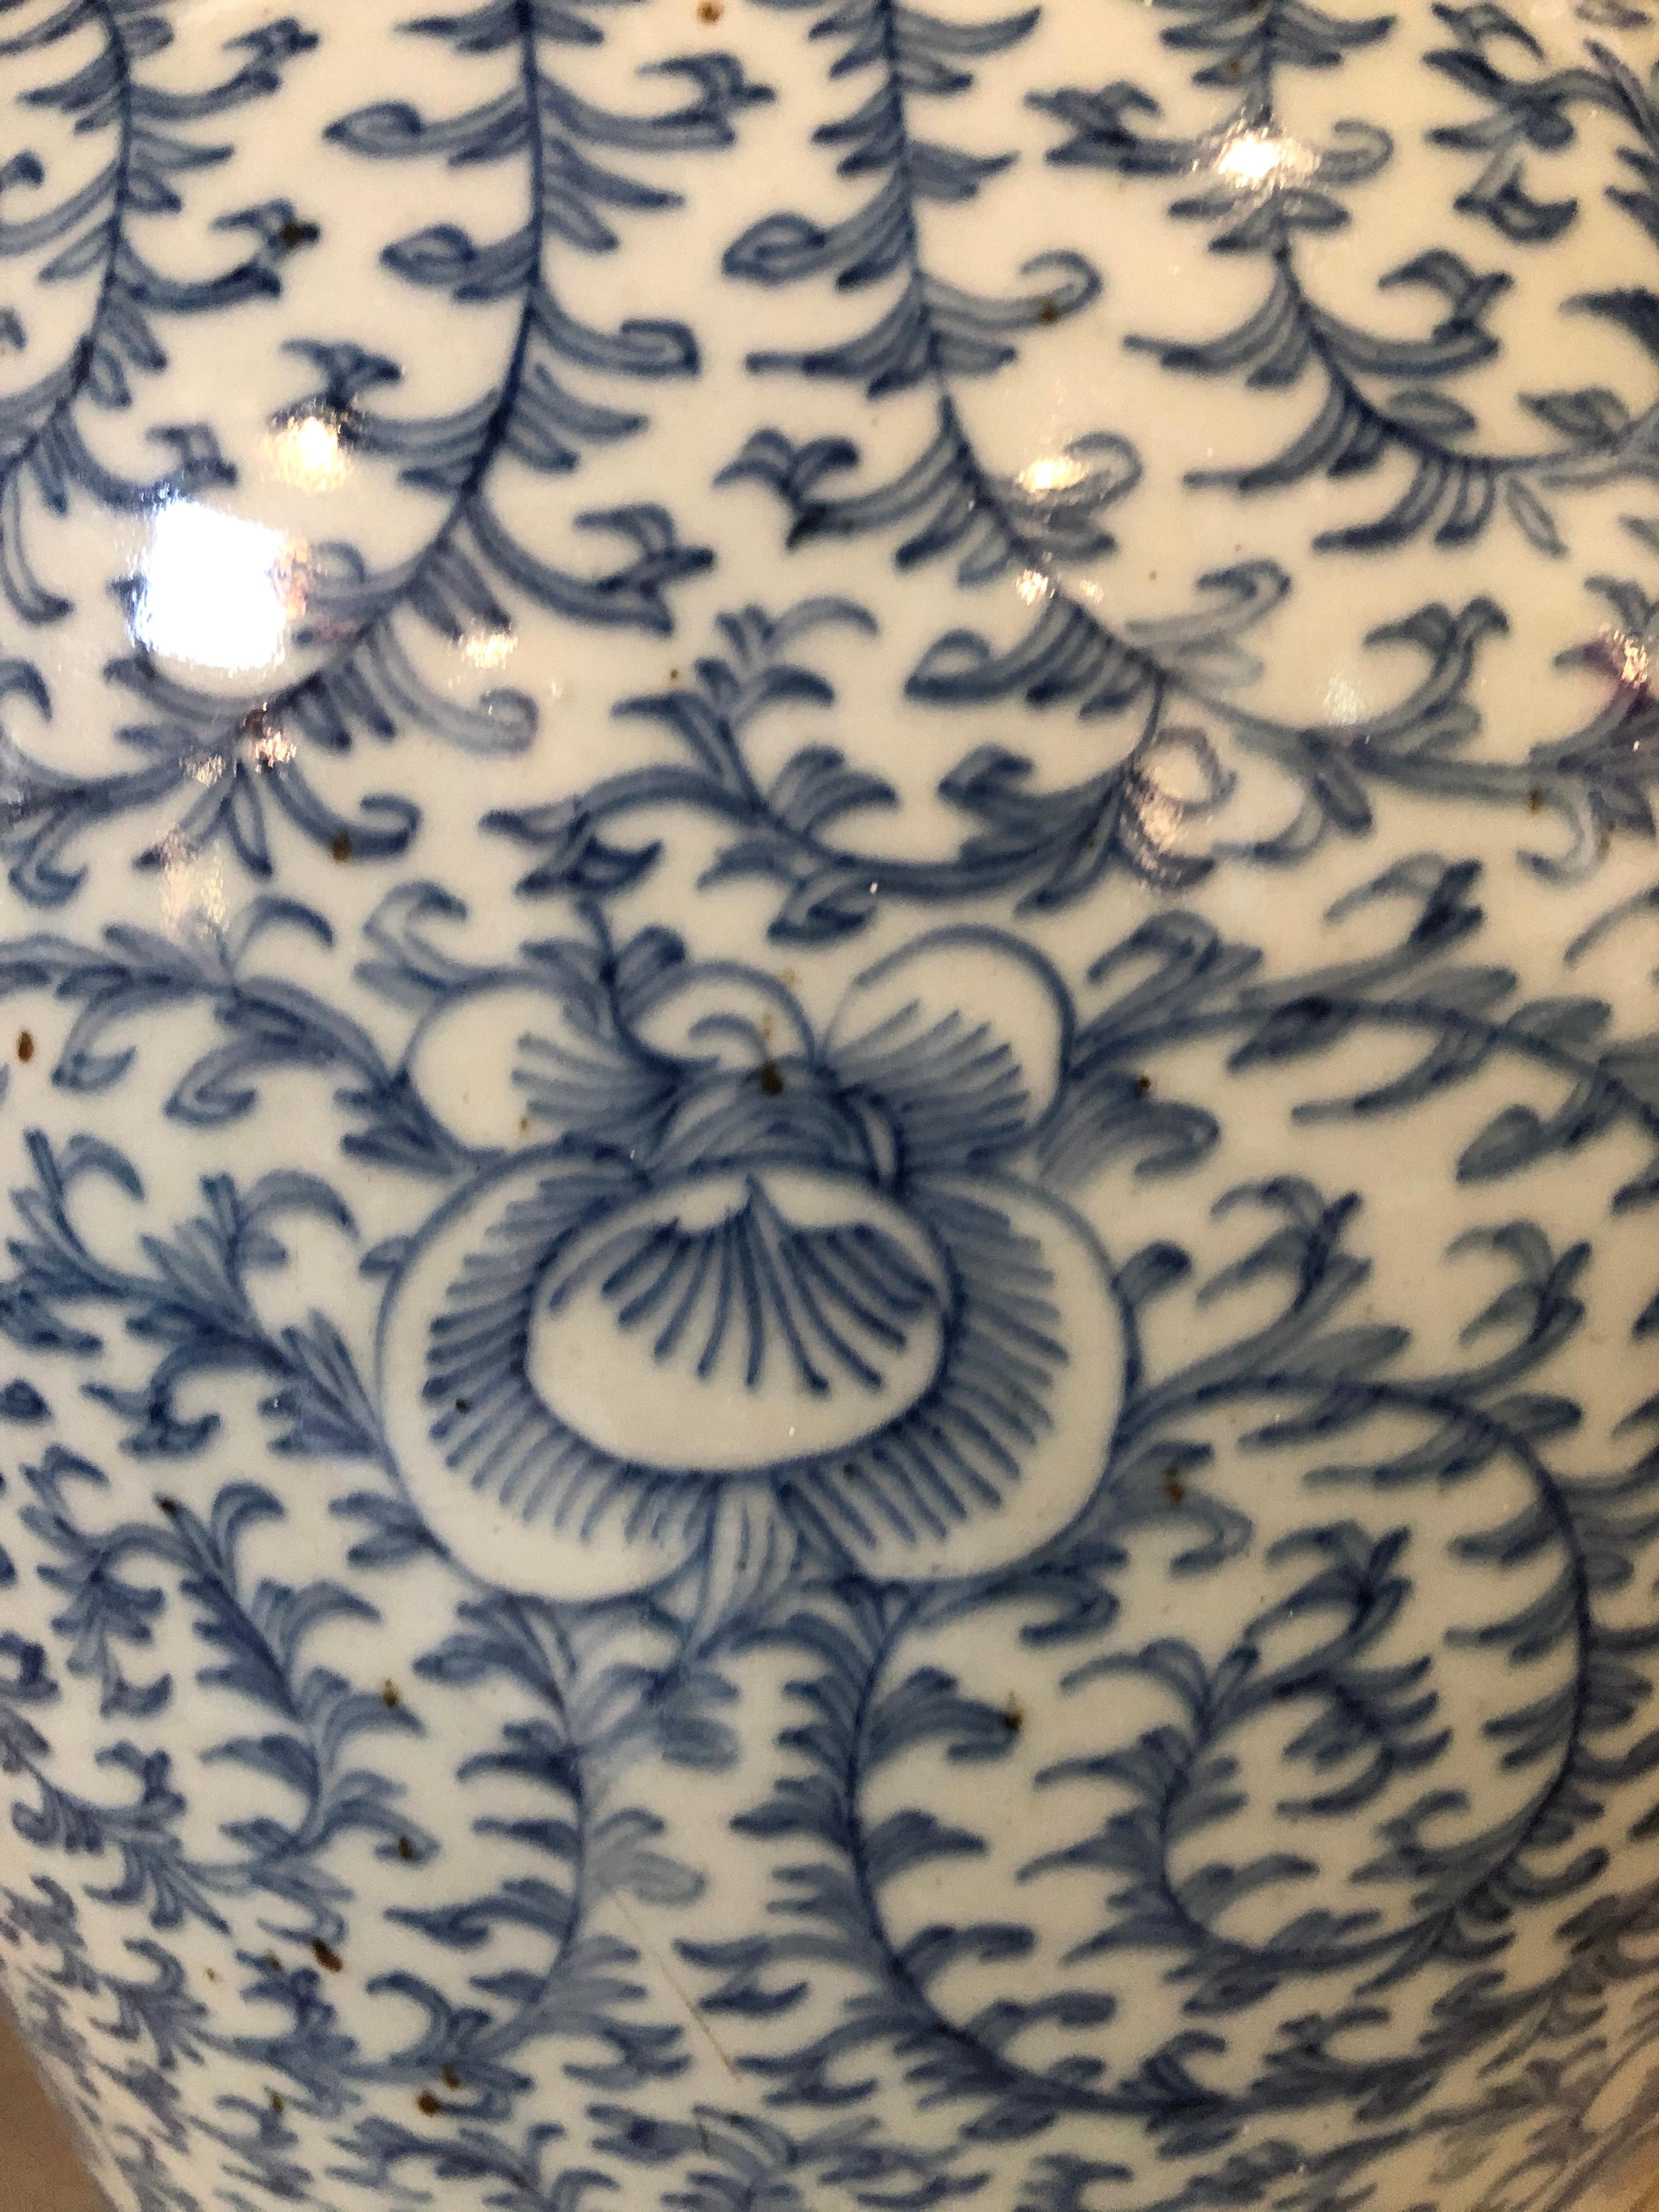 20th Century Blue and White Chinese Lidded Ginger Jar, Vase or Urn, Signed on Bottom